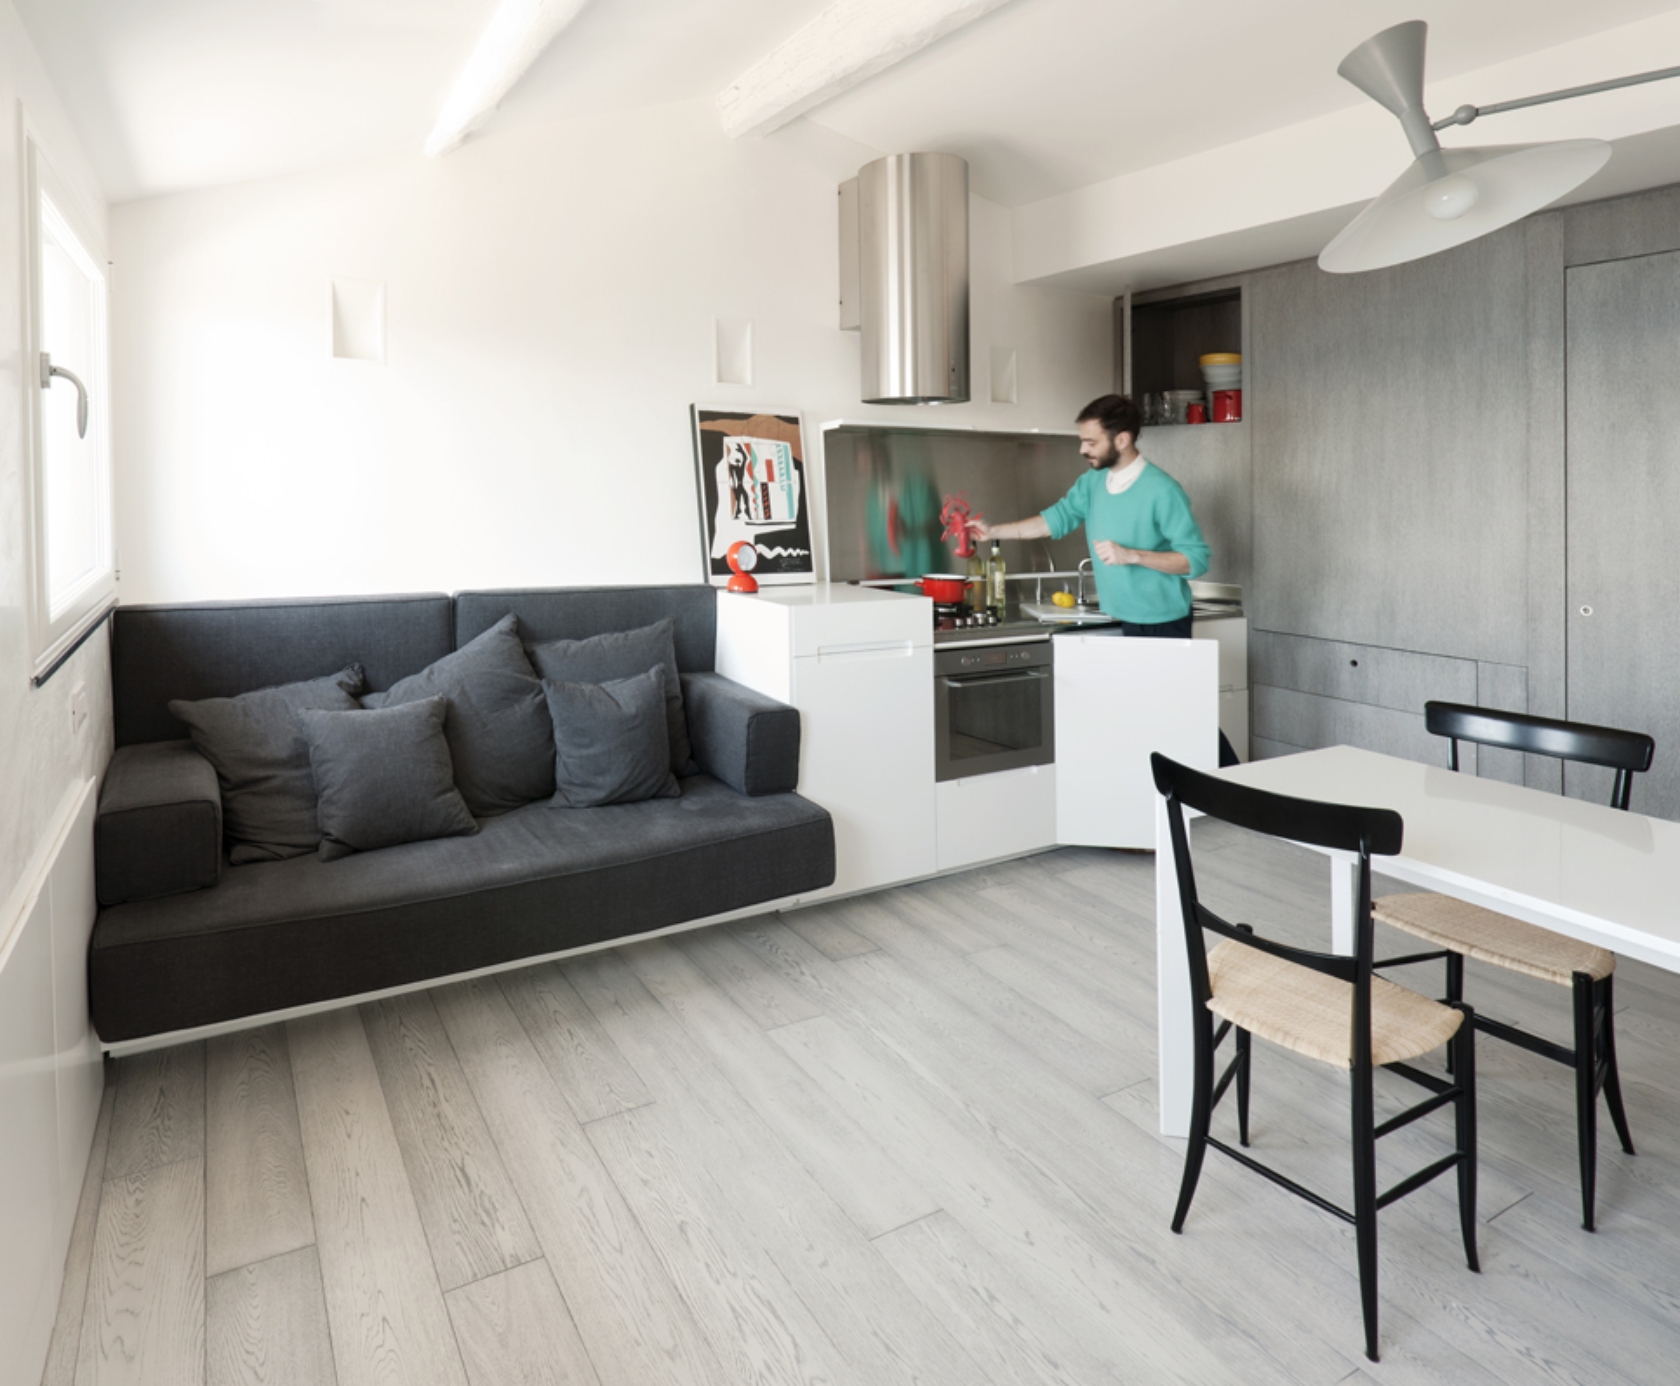 kitchen design in a studio apartment